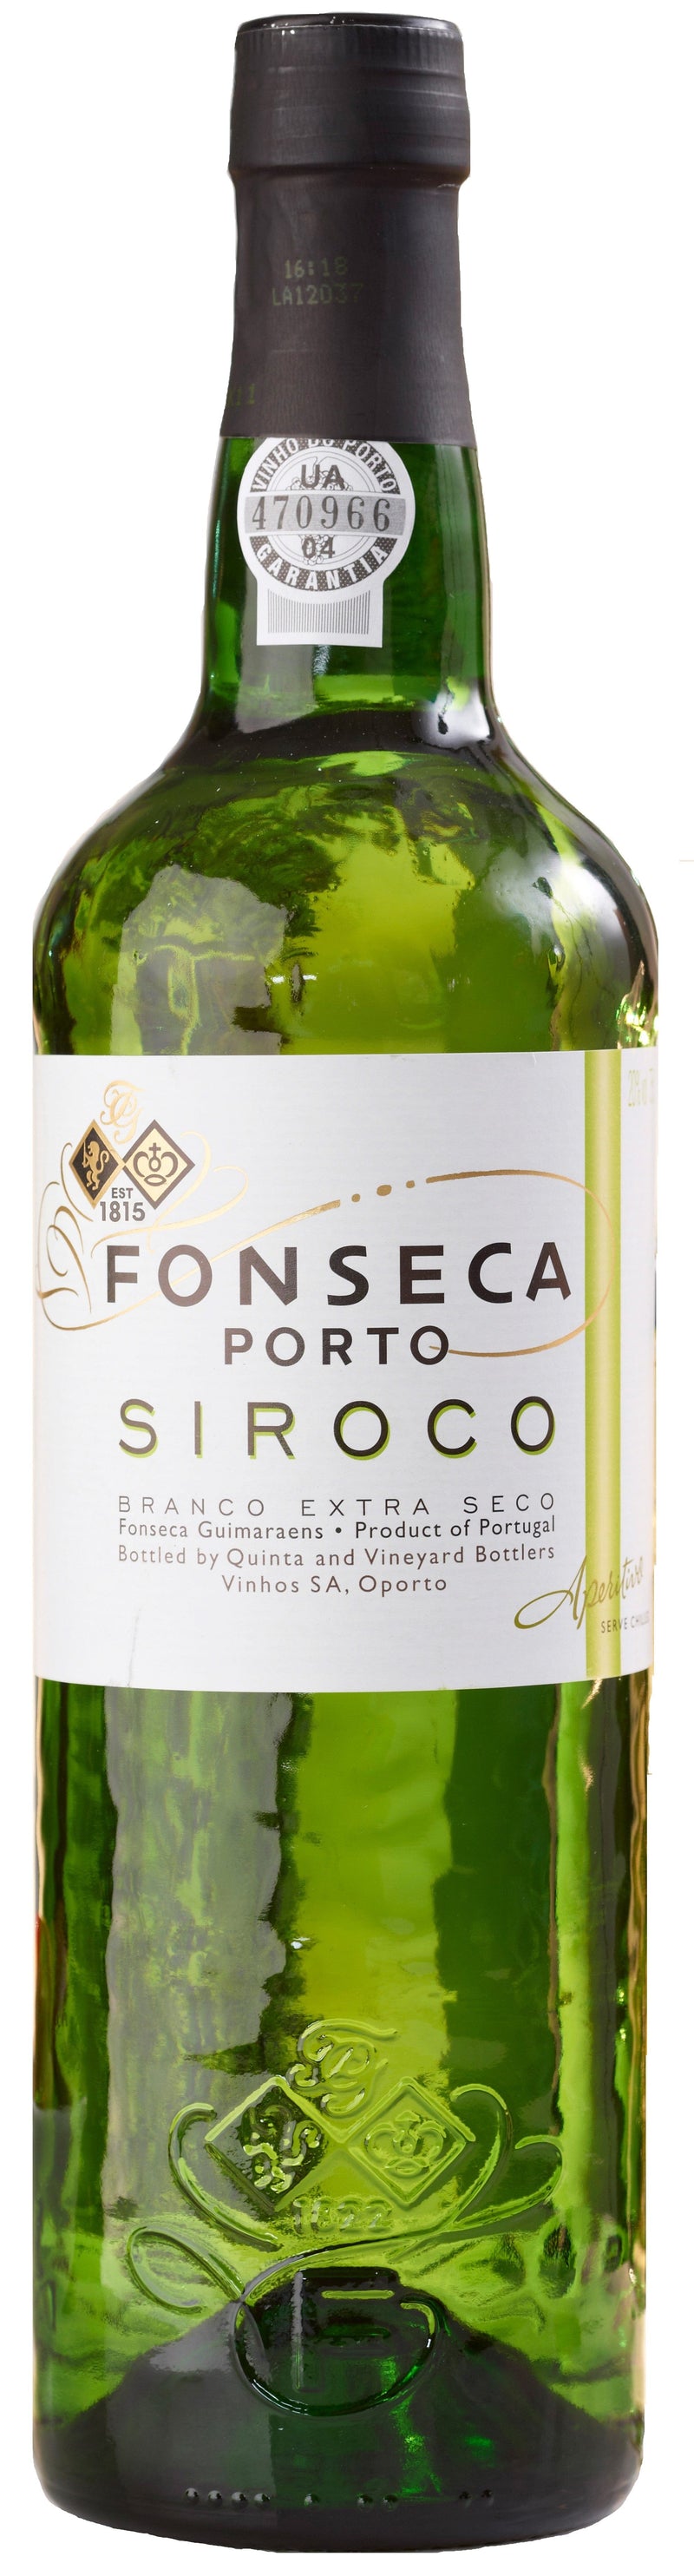 Fonseca Siroco White Port 75cl